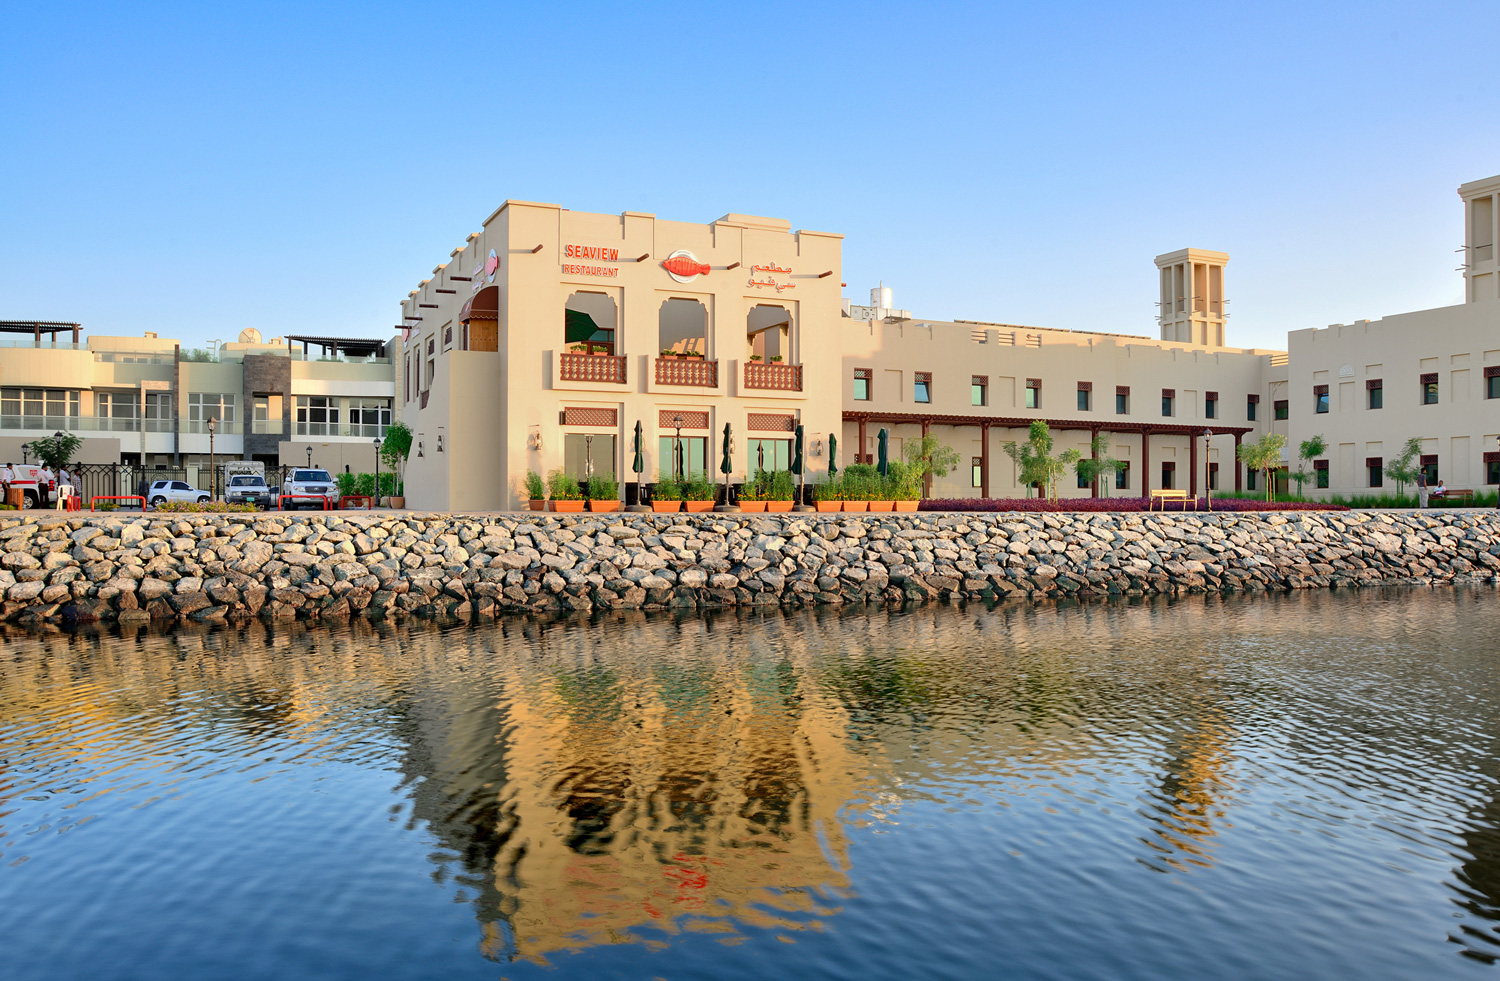  Seaview Seafood Restaurants Dubai